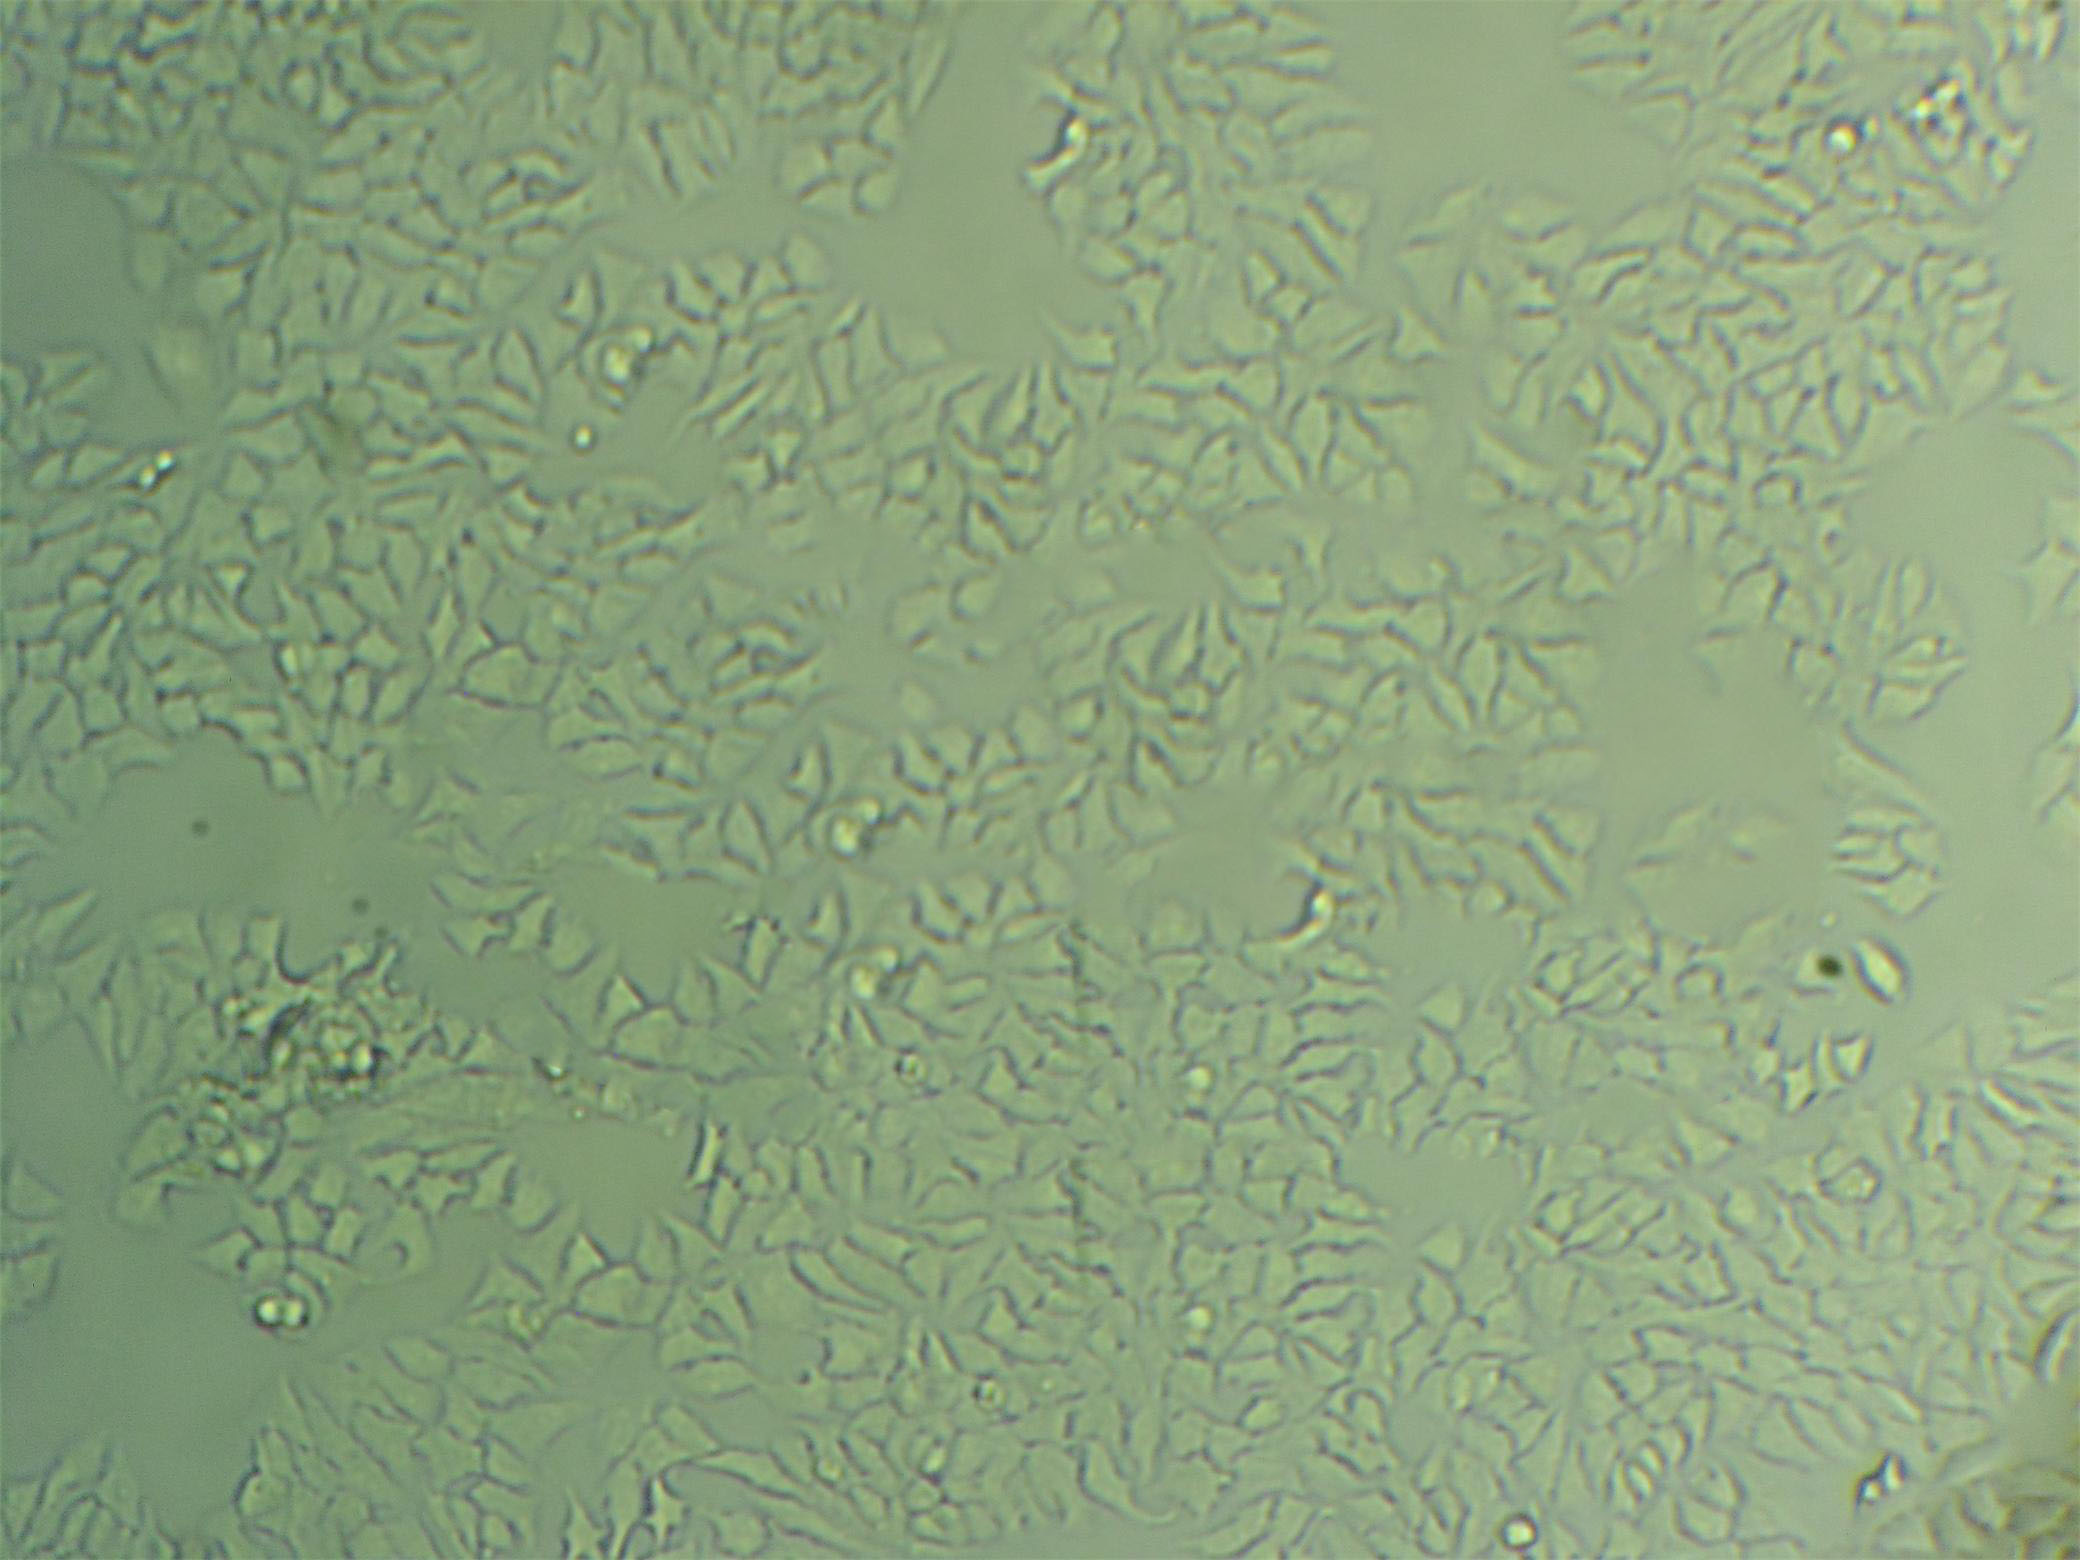 L2 Cell|大鼠肺泡上皮细胞,L2 Cell